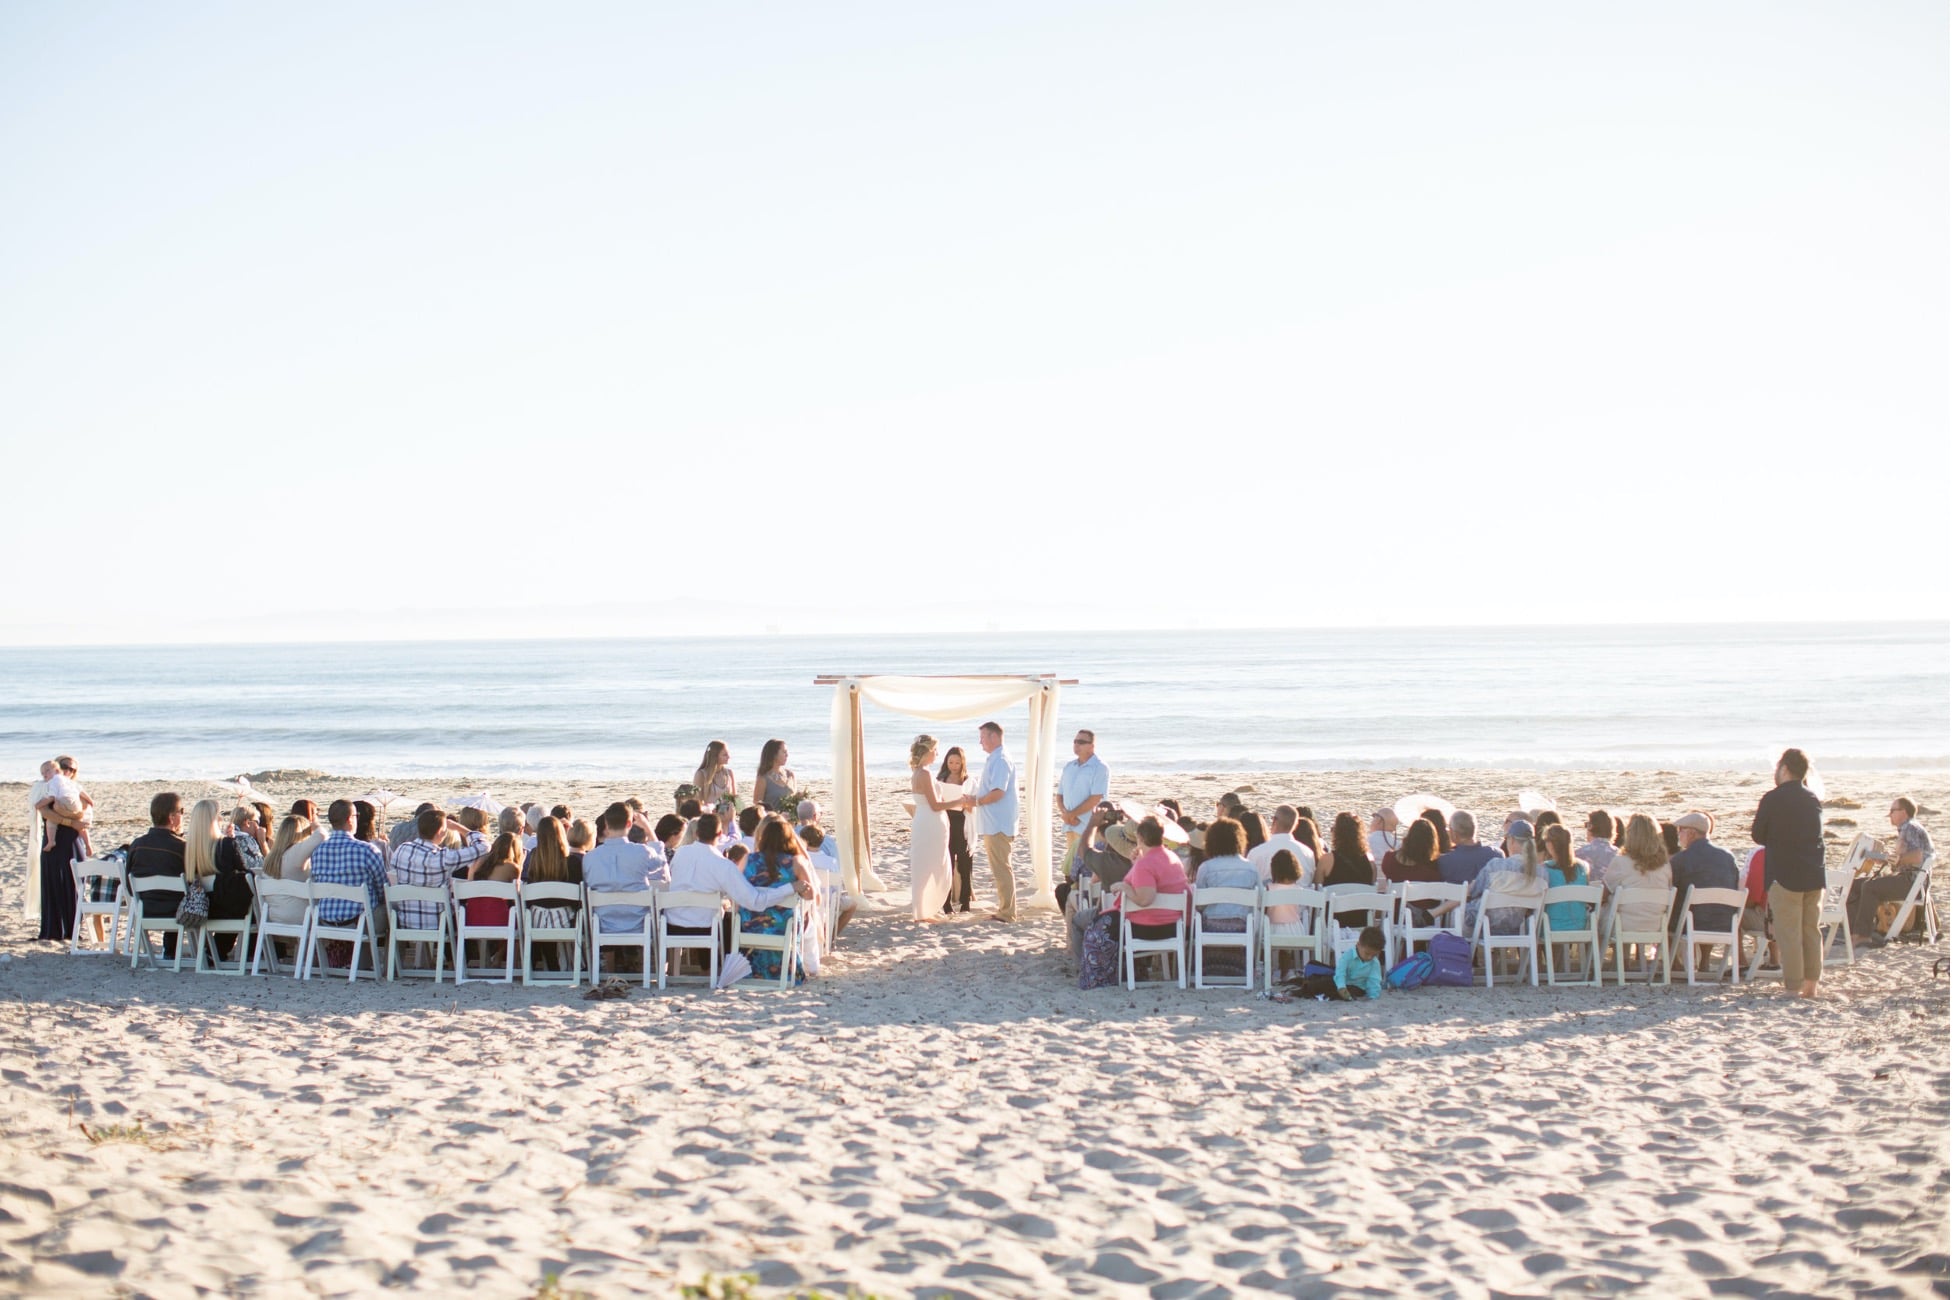 A wedding on the beach is one example of the idyllic wedding venues in Santa Barbara